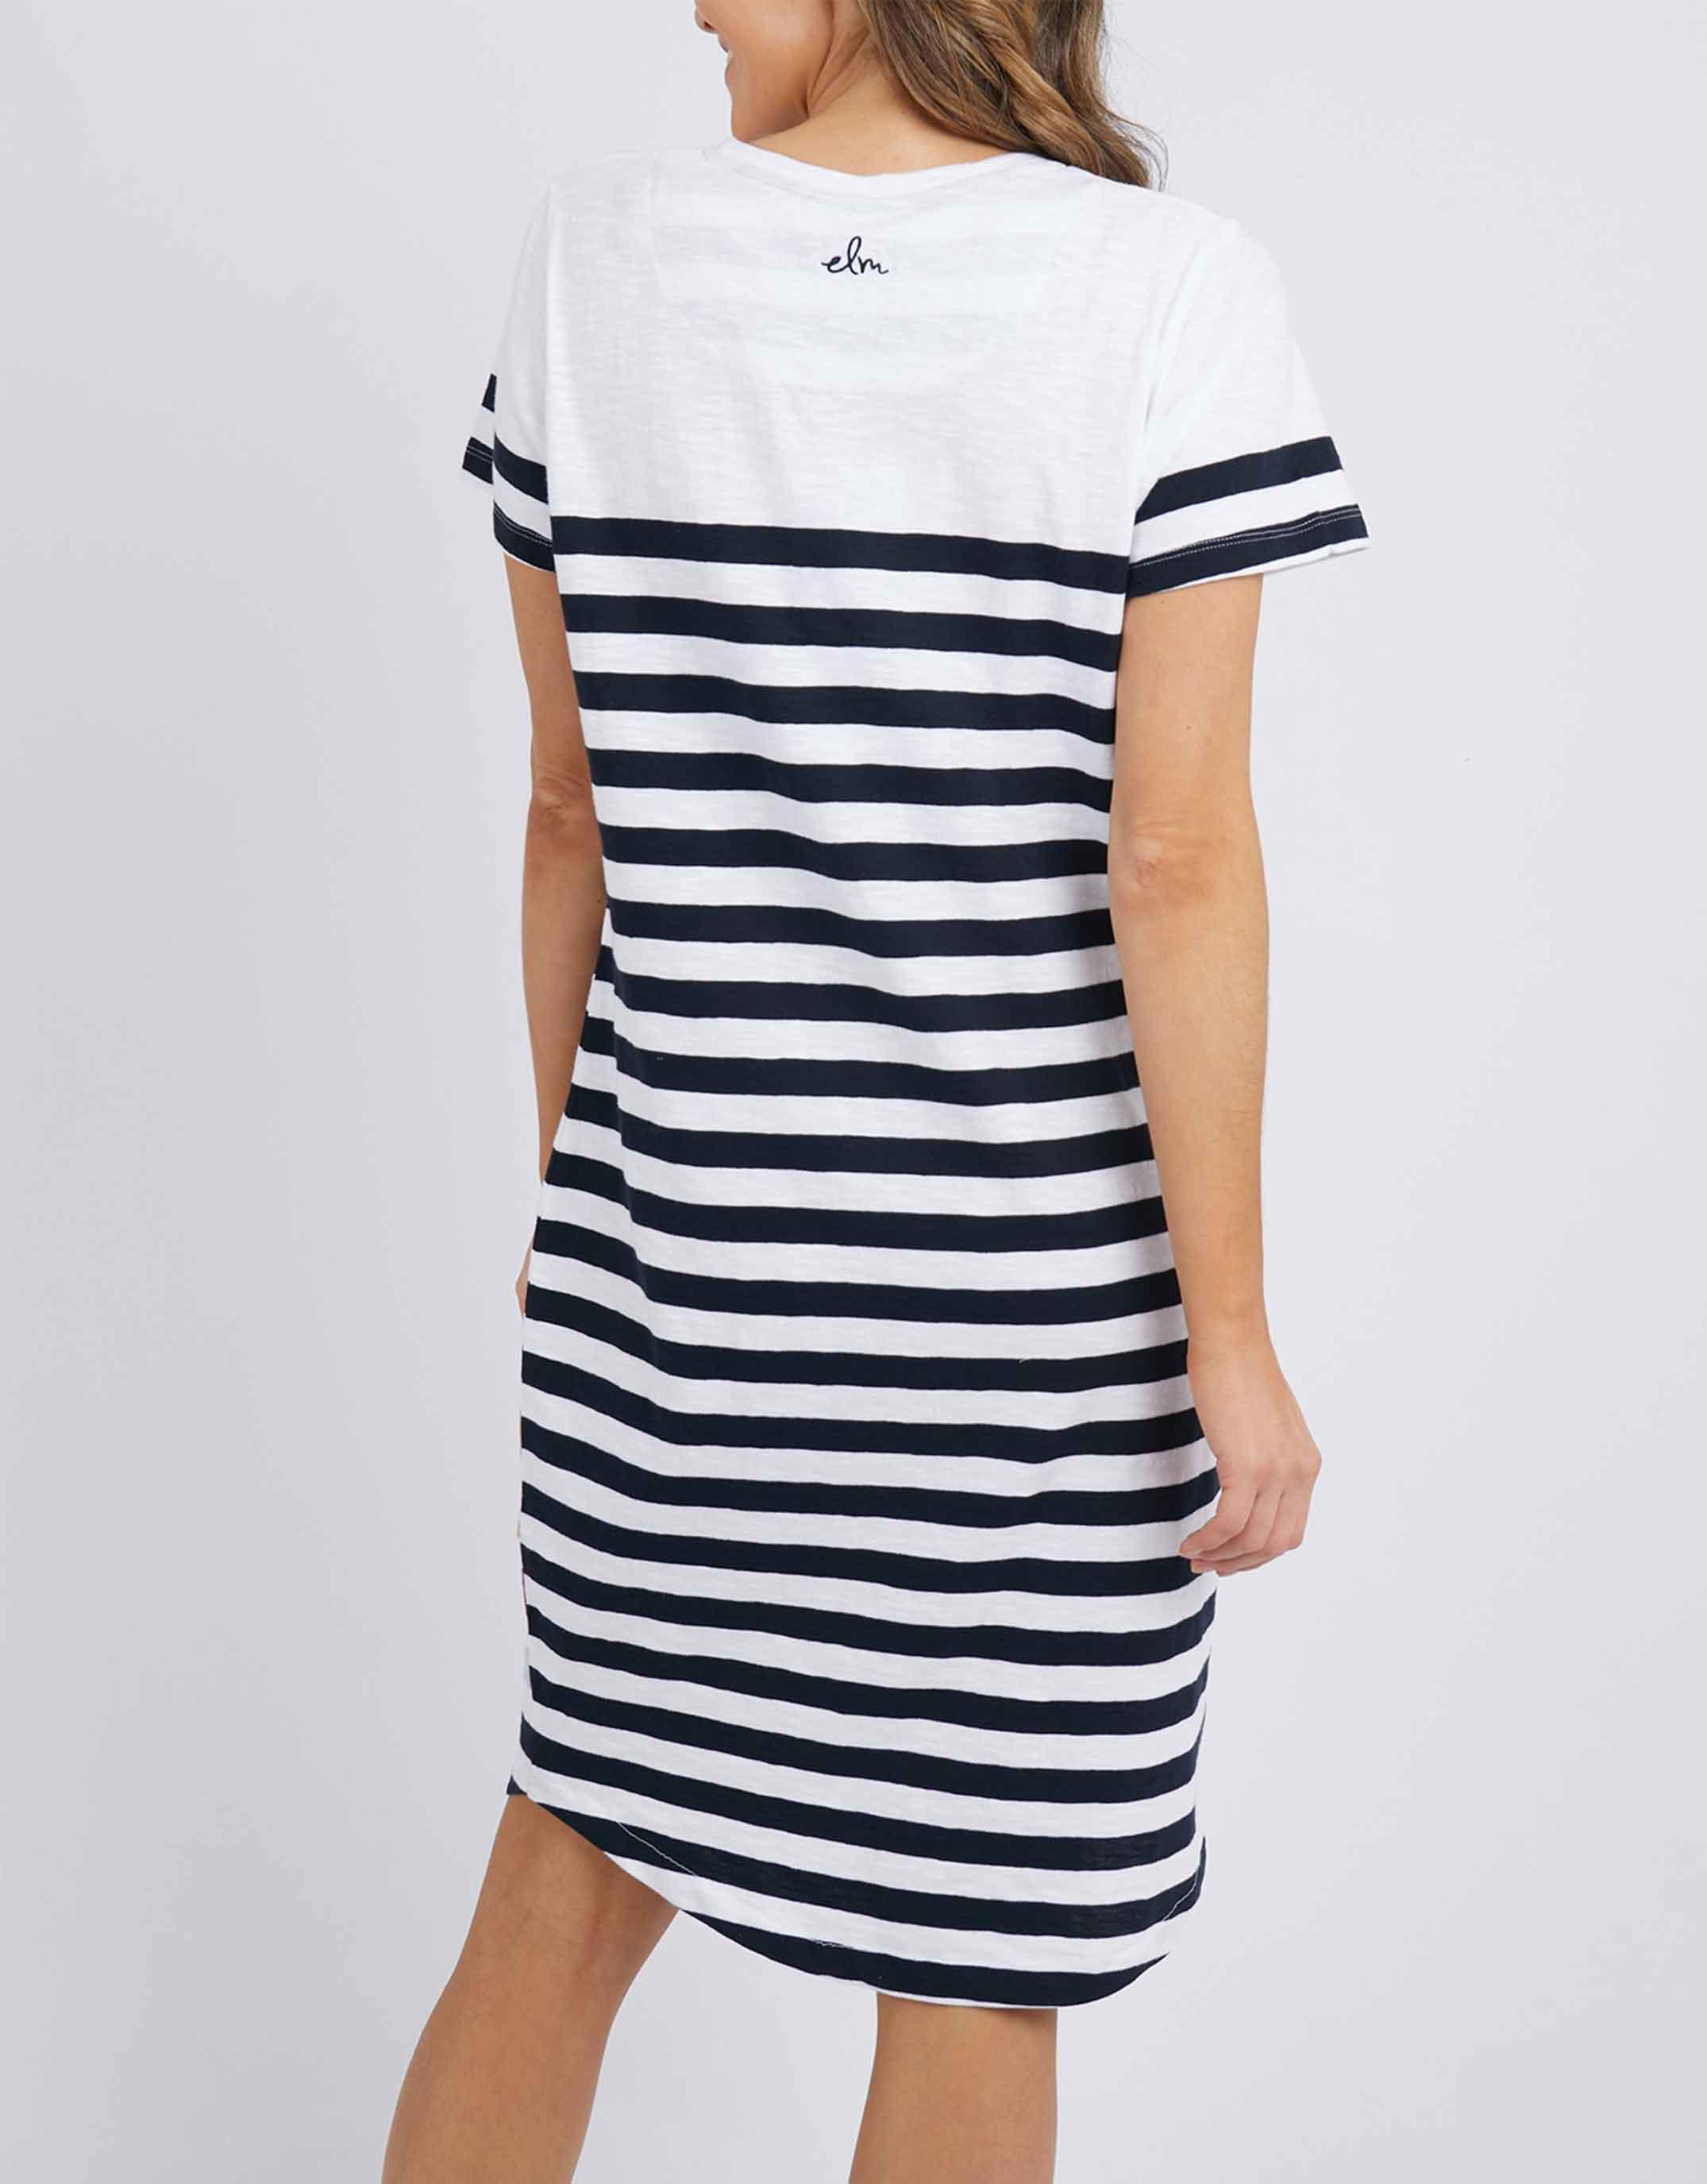 White & Co | Elm Clothimg | A Head Of Time Dress - Navy/White Stripe